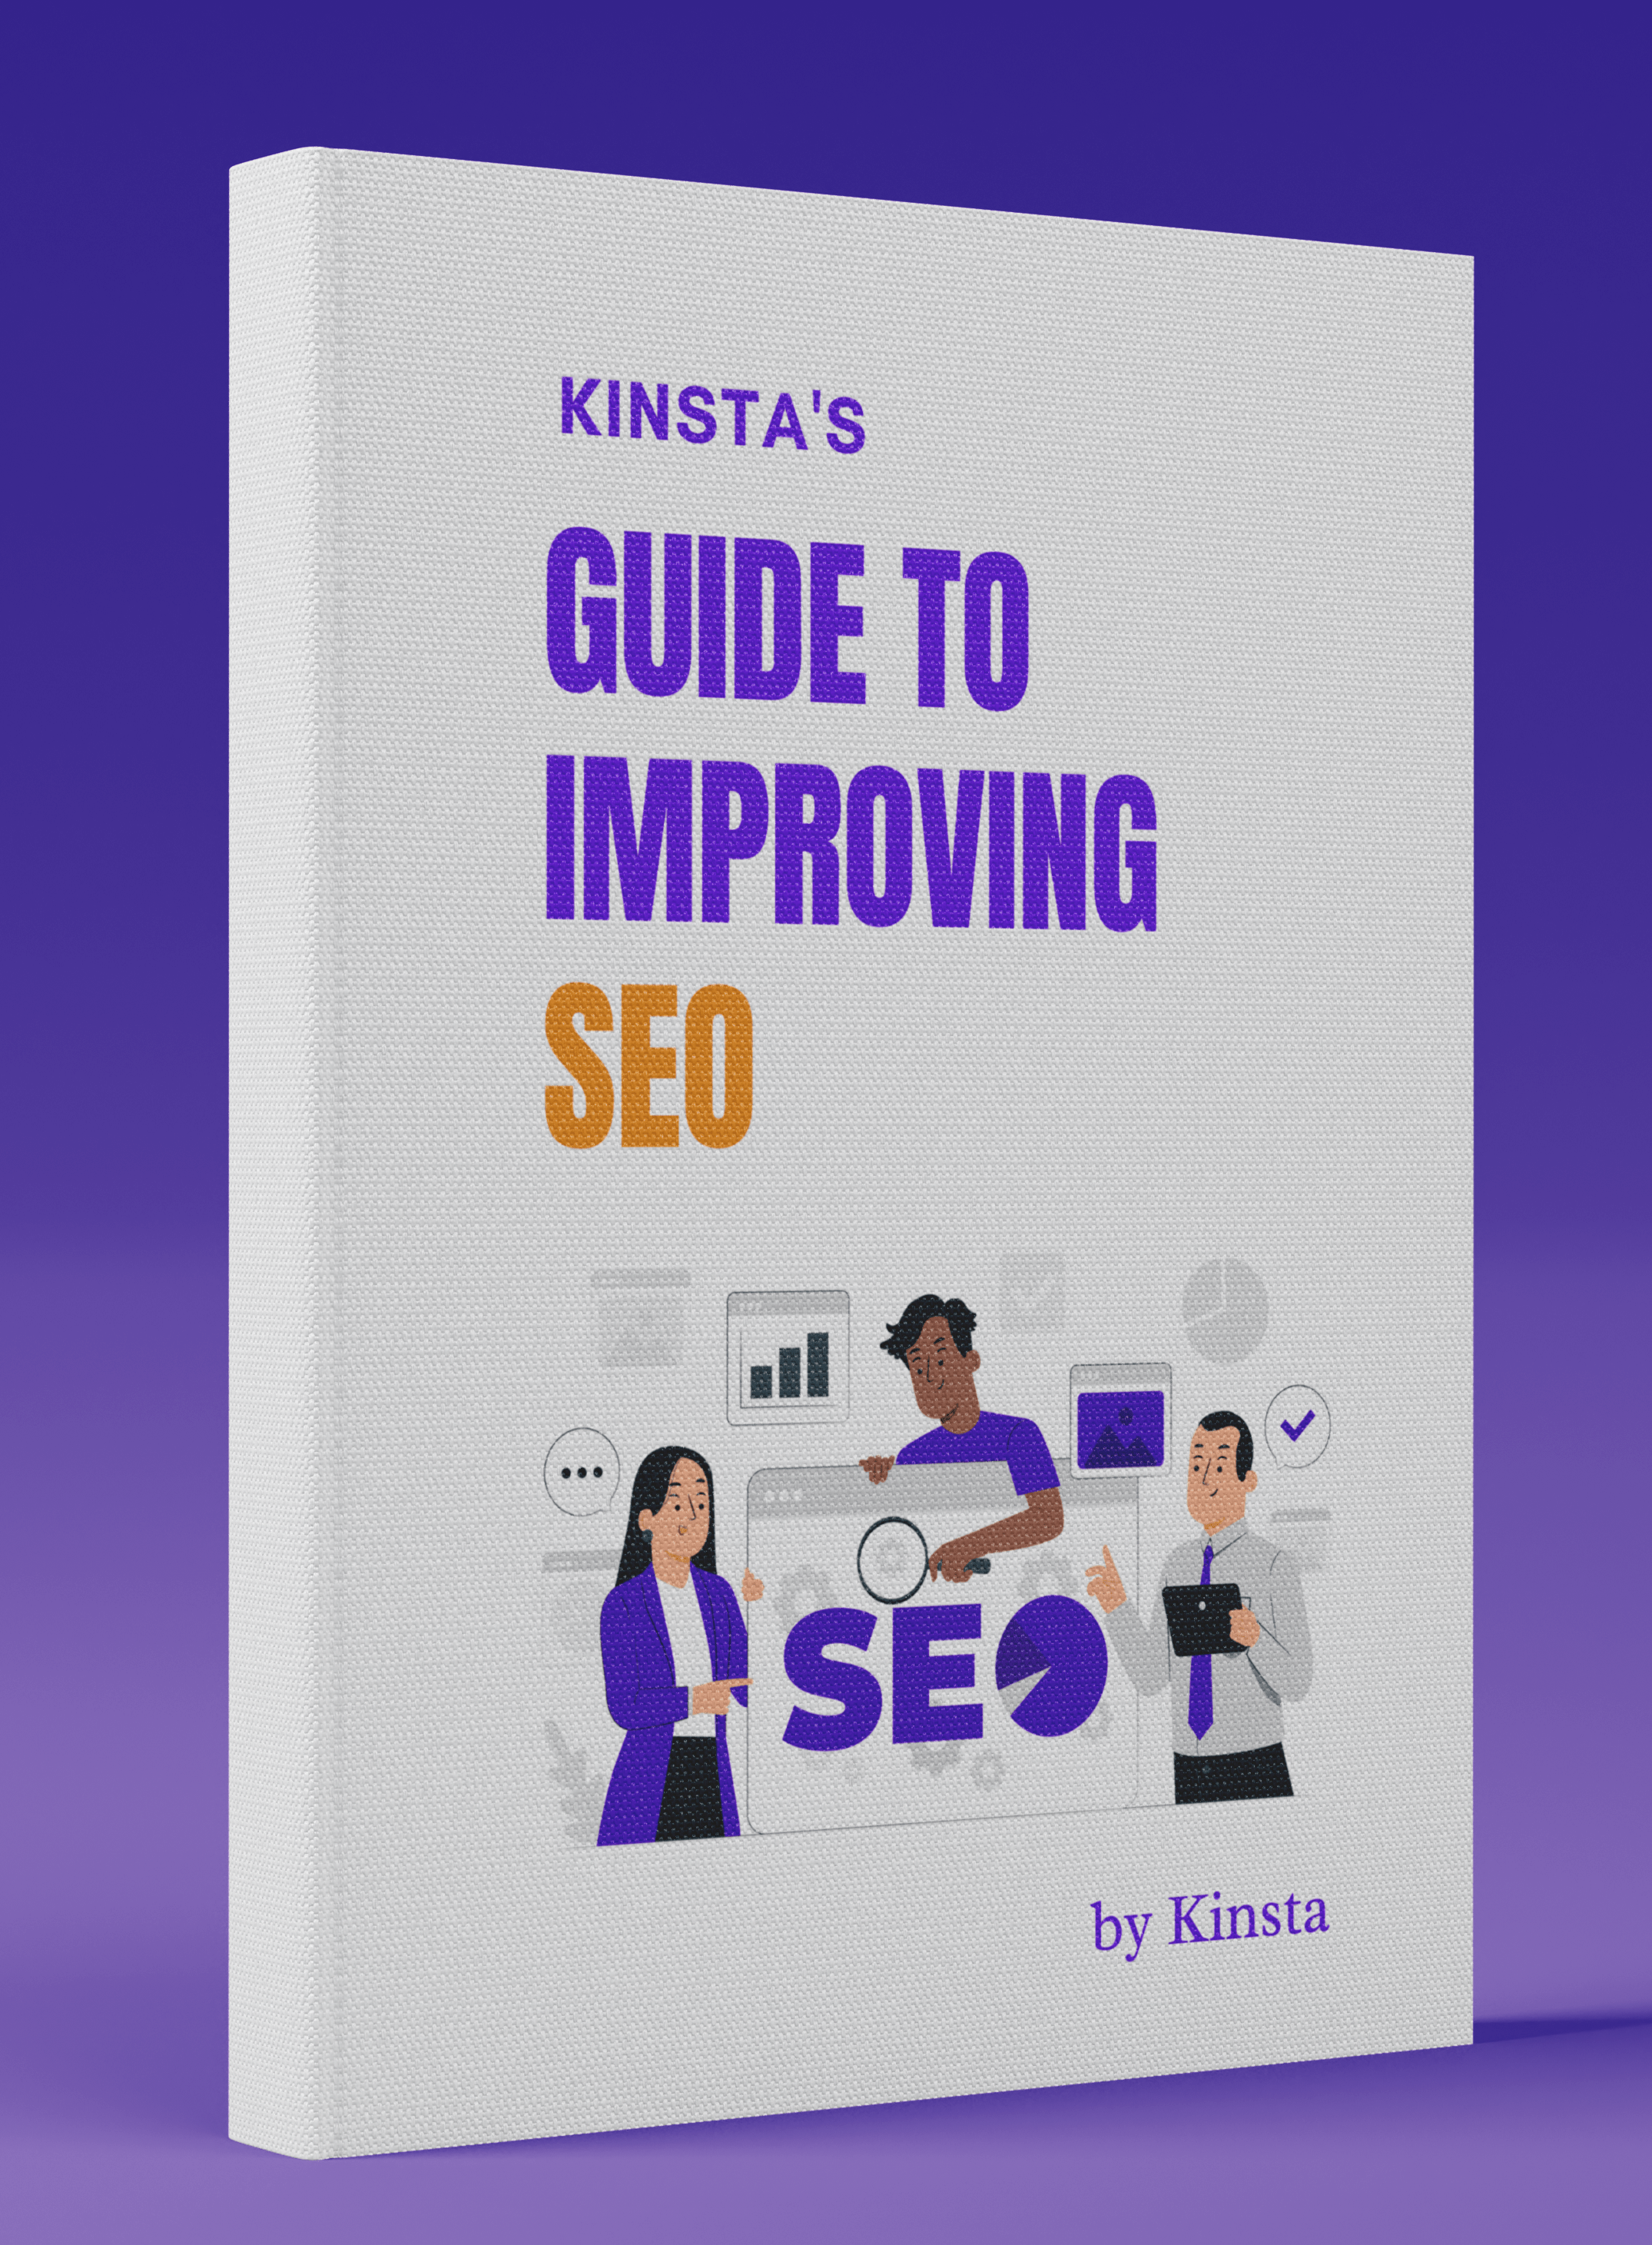 SEO guide by Kinsta